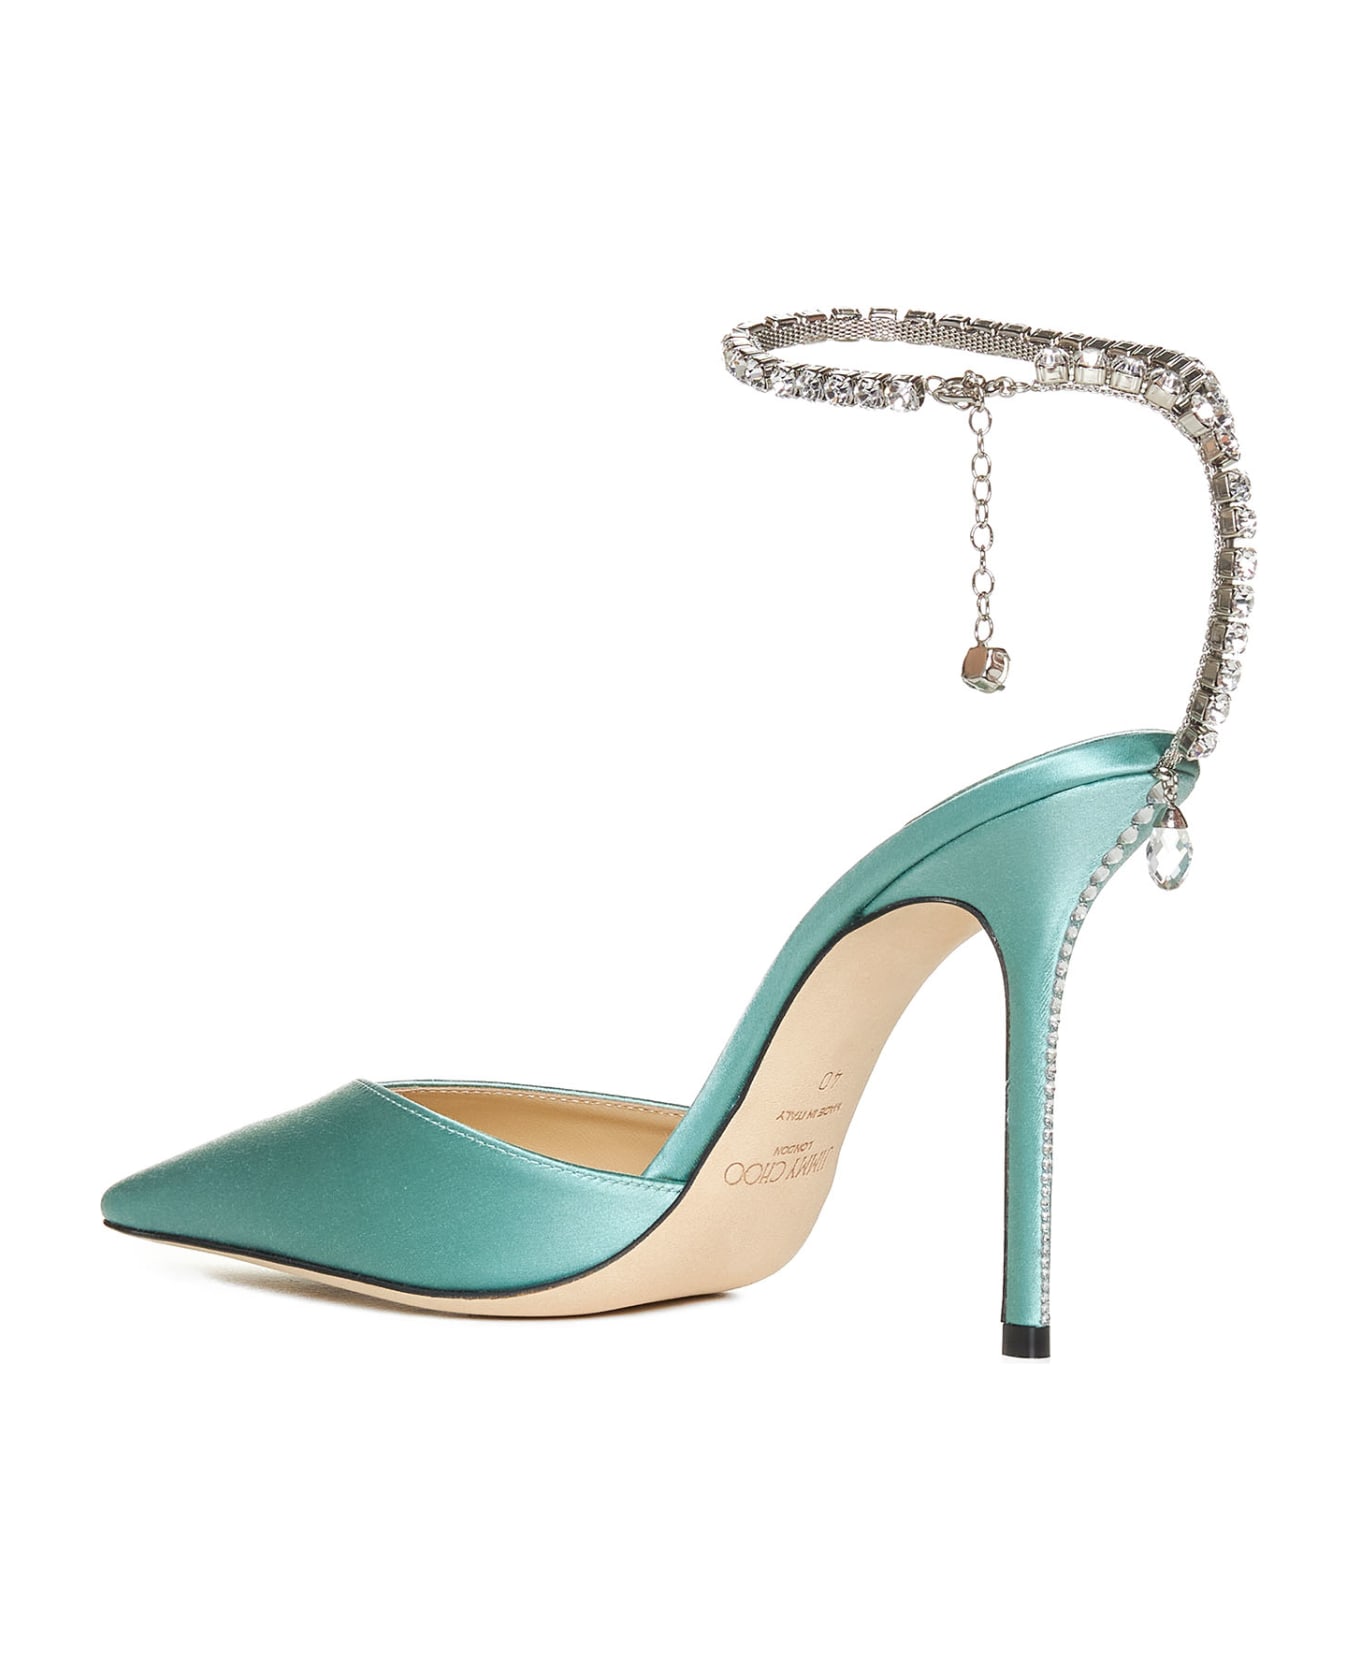 Jimmy Choo High-heeled shoe - Smoke green/crystal